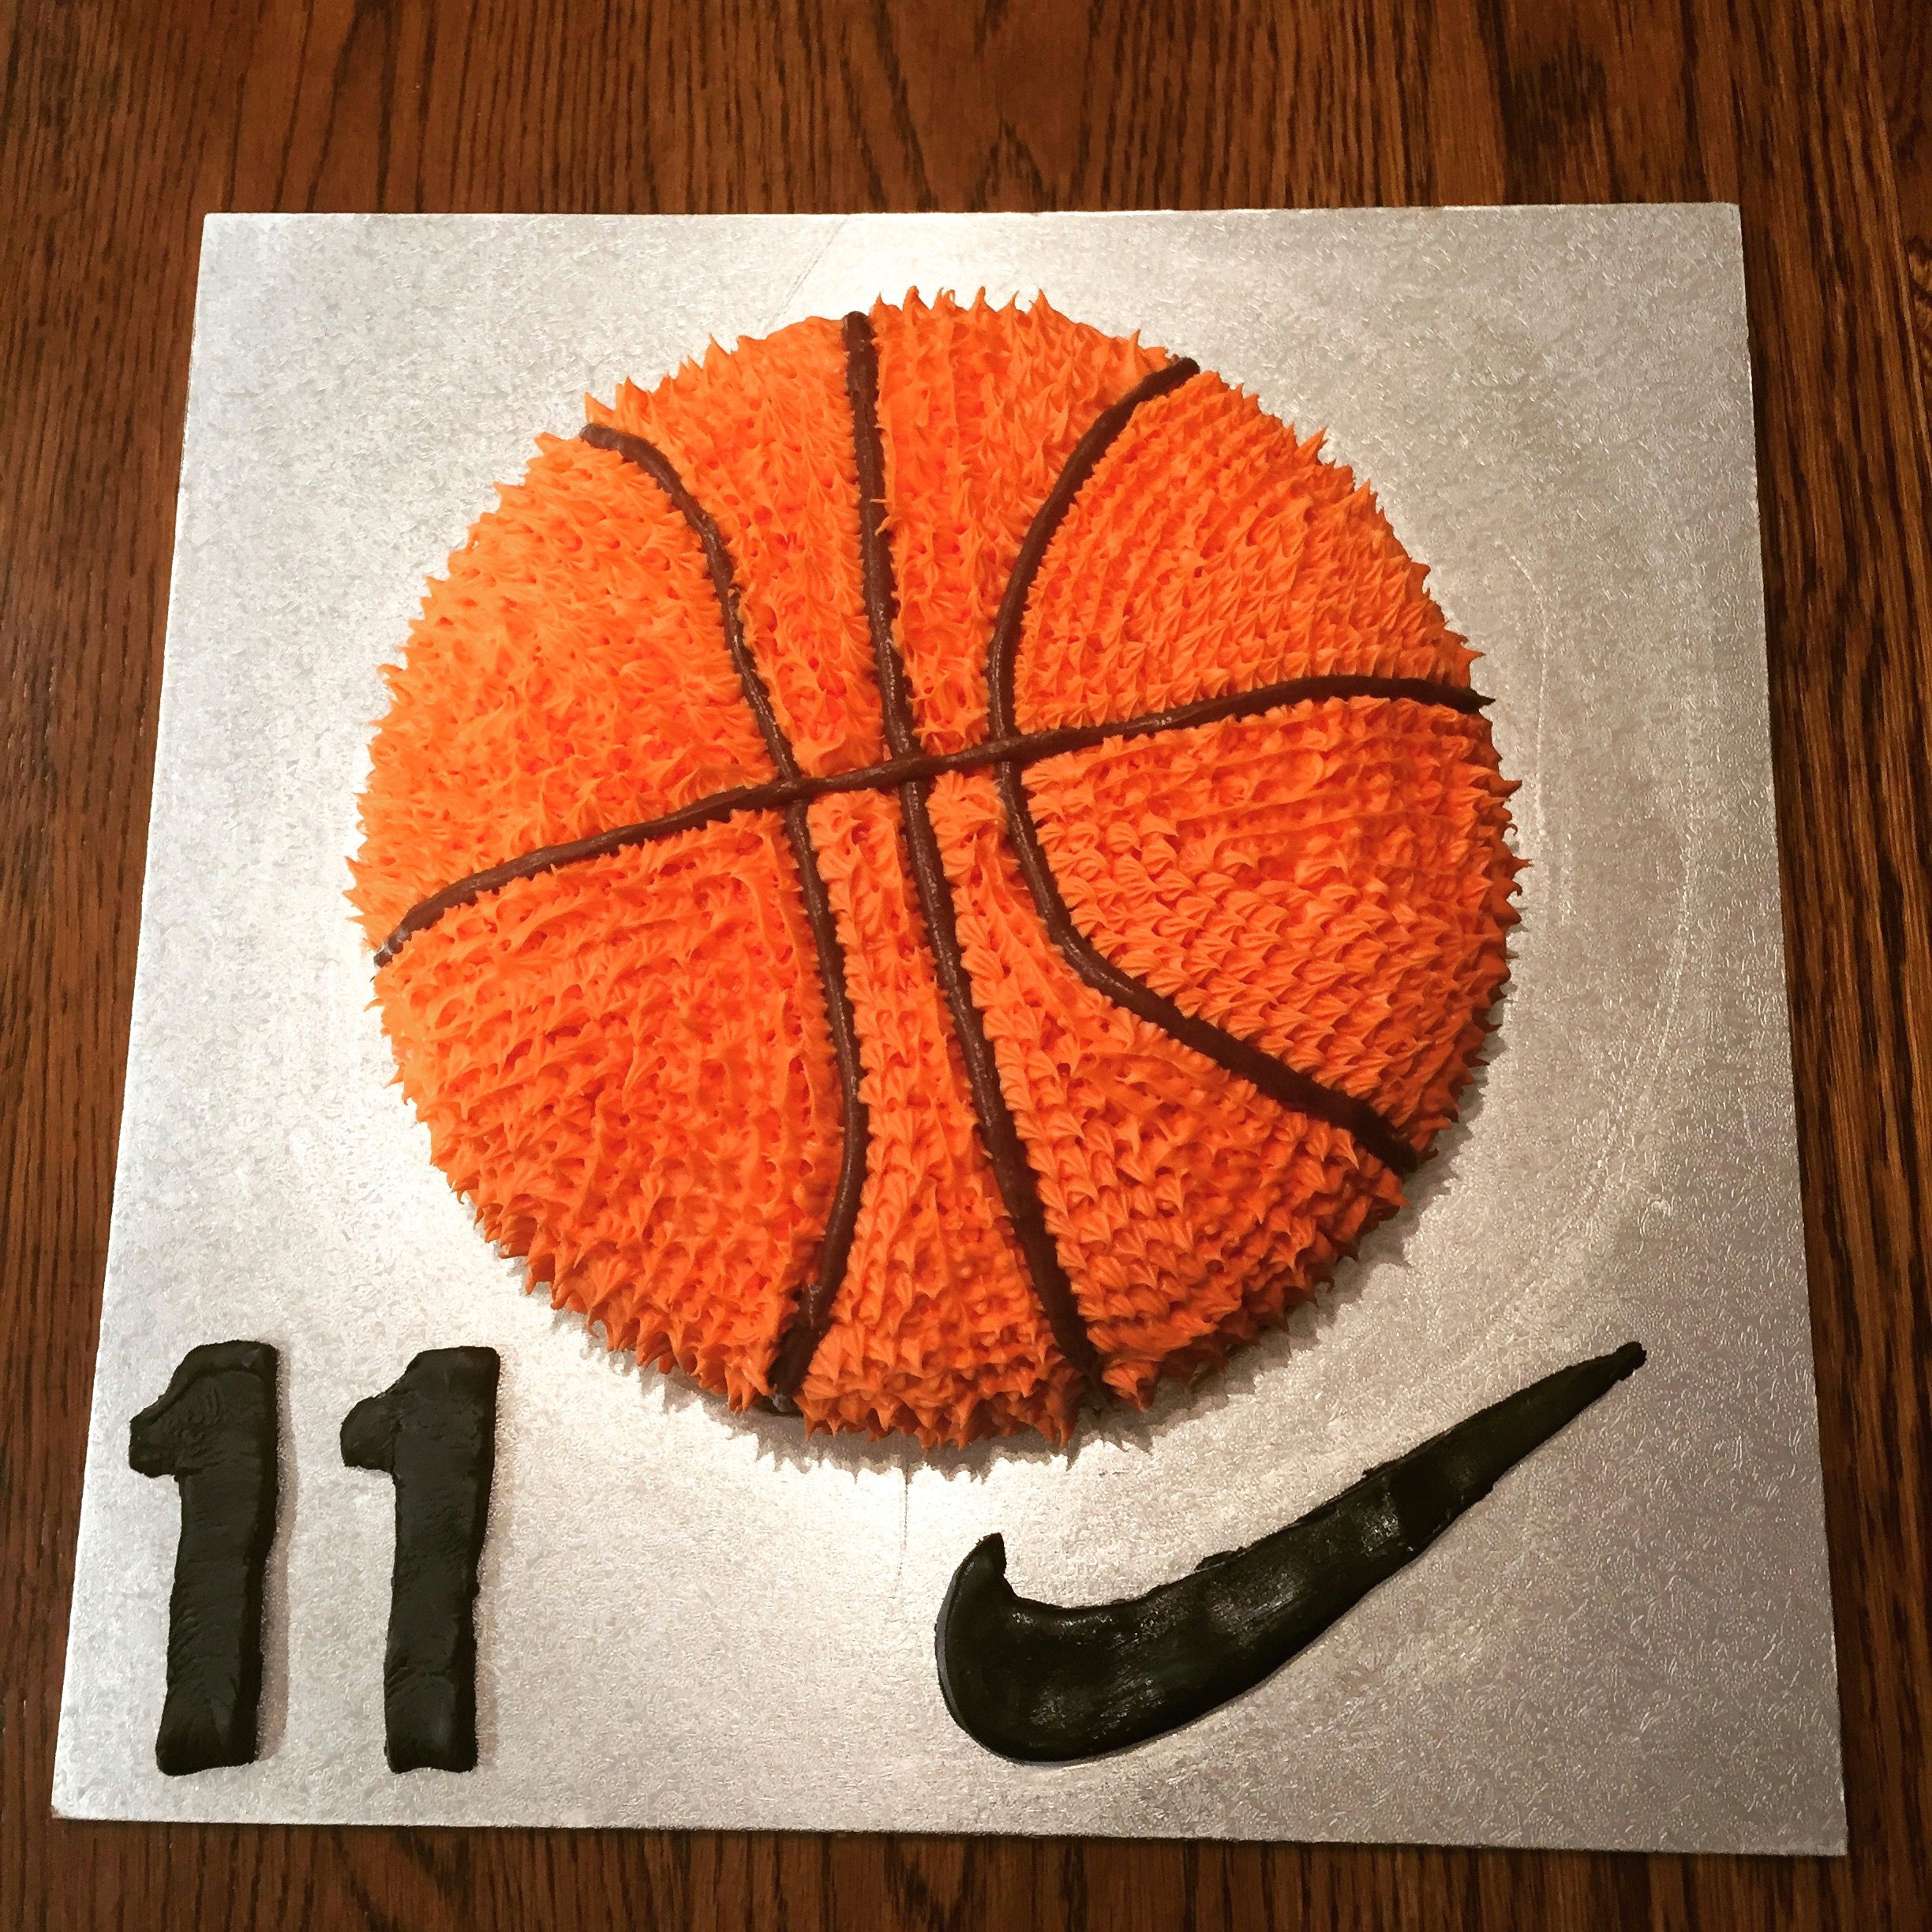 Easy Nba Drawings Easy Basketball Cake Recipe Basketball Birthday Cake Birthday